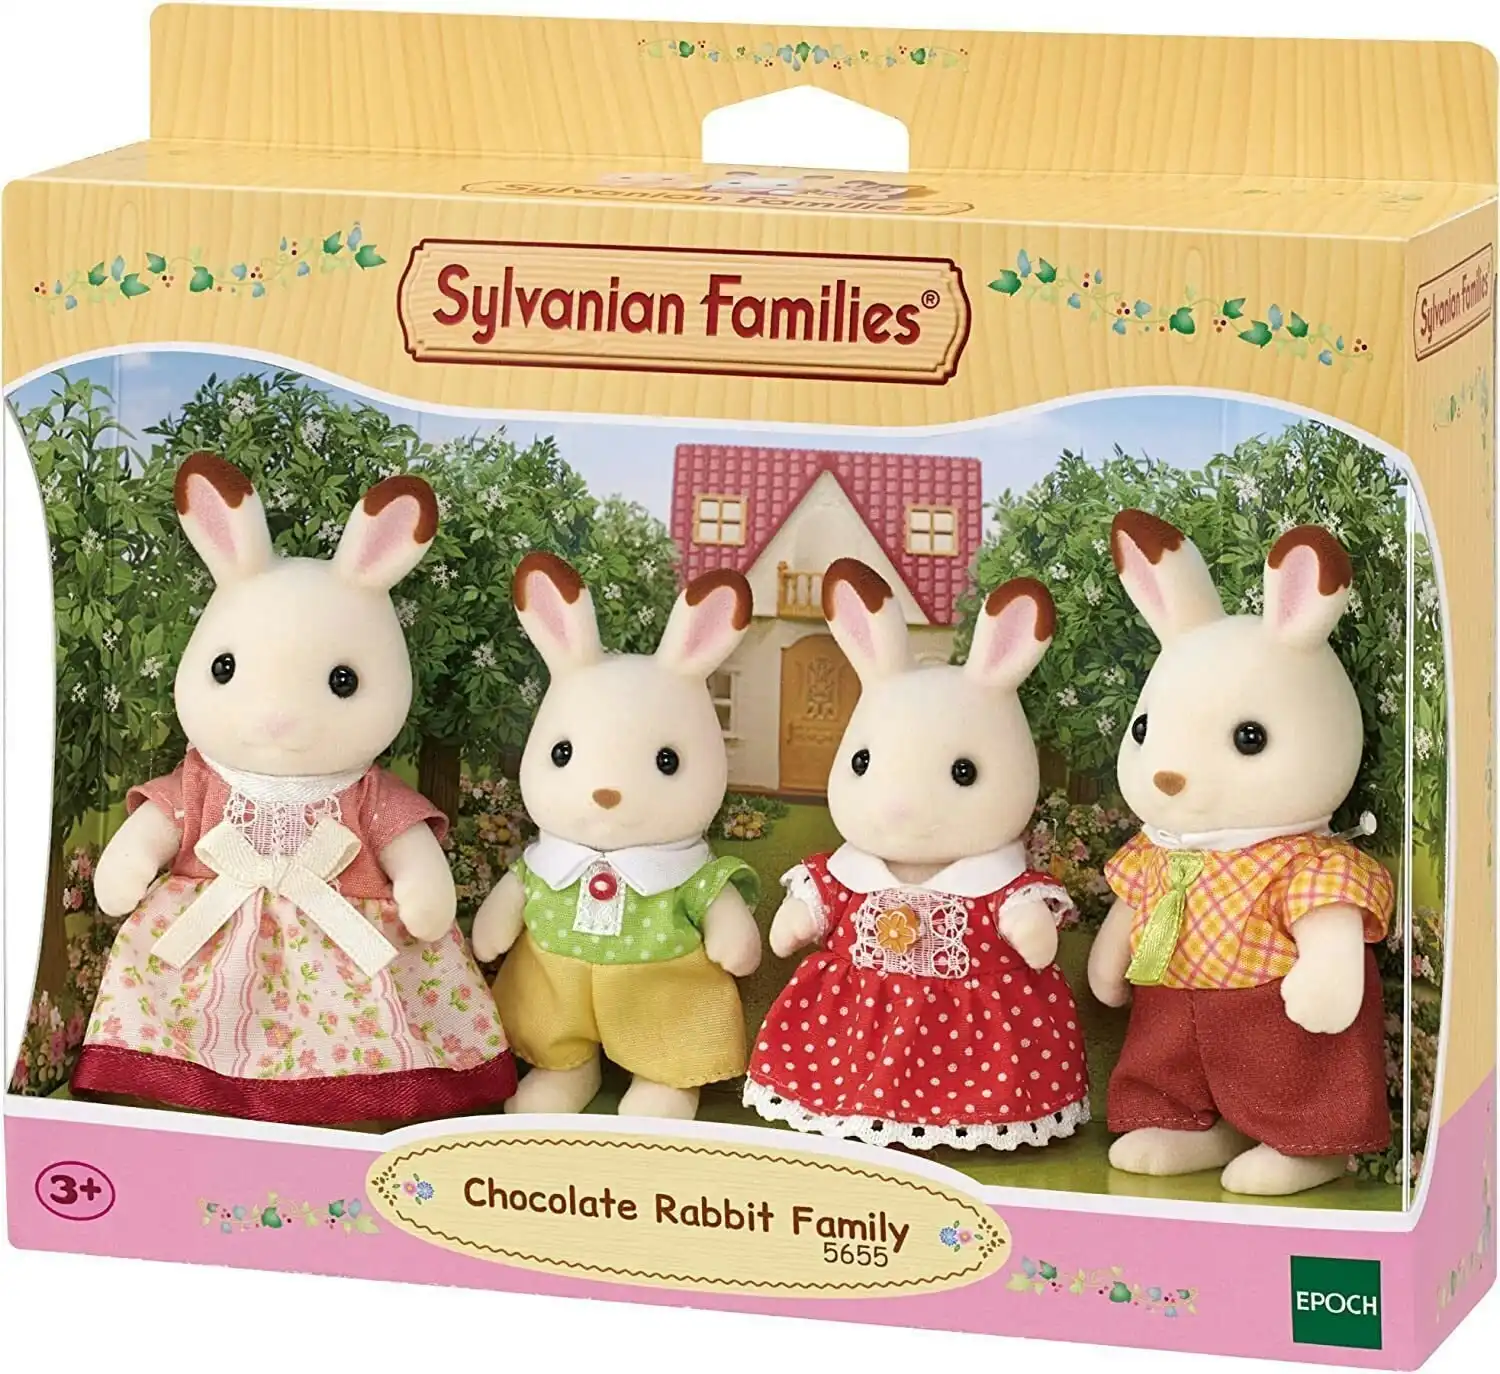 Sylvanian Families - Chocolate Rabbit Family Animal Doll Playset